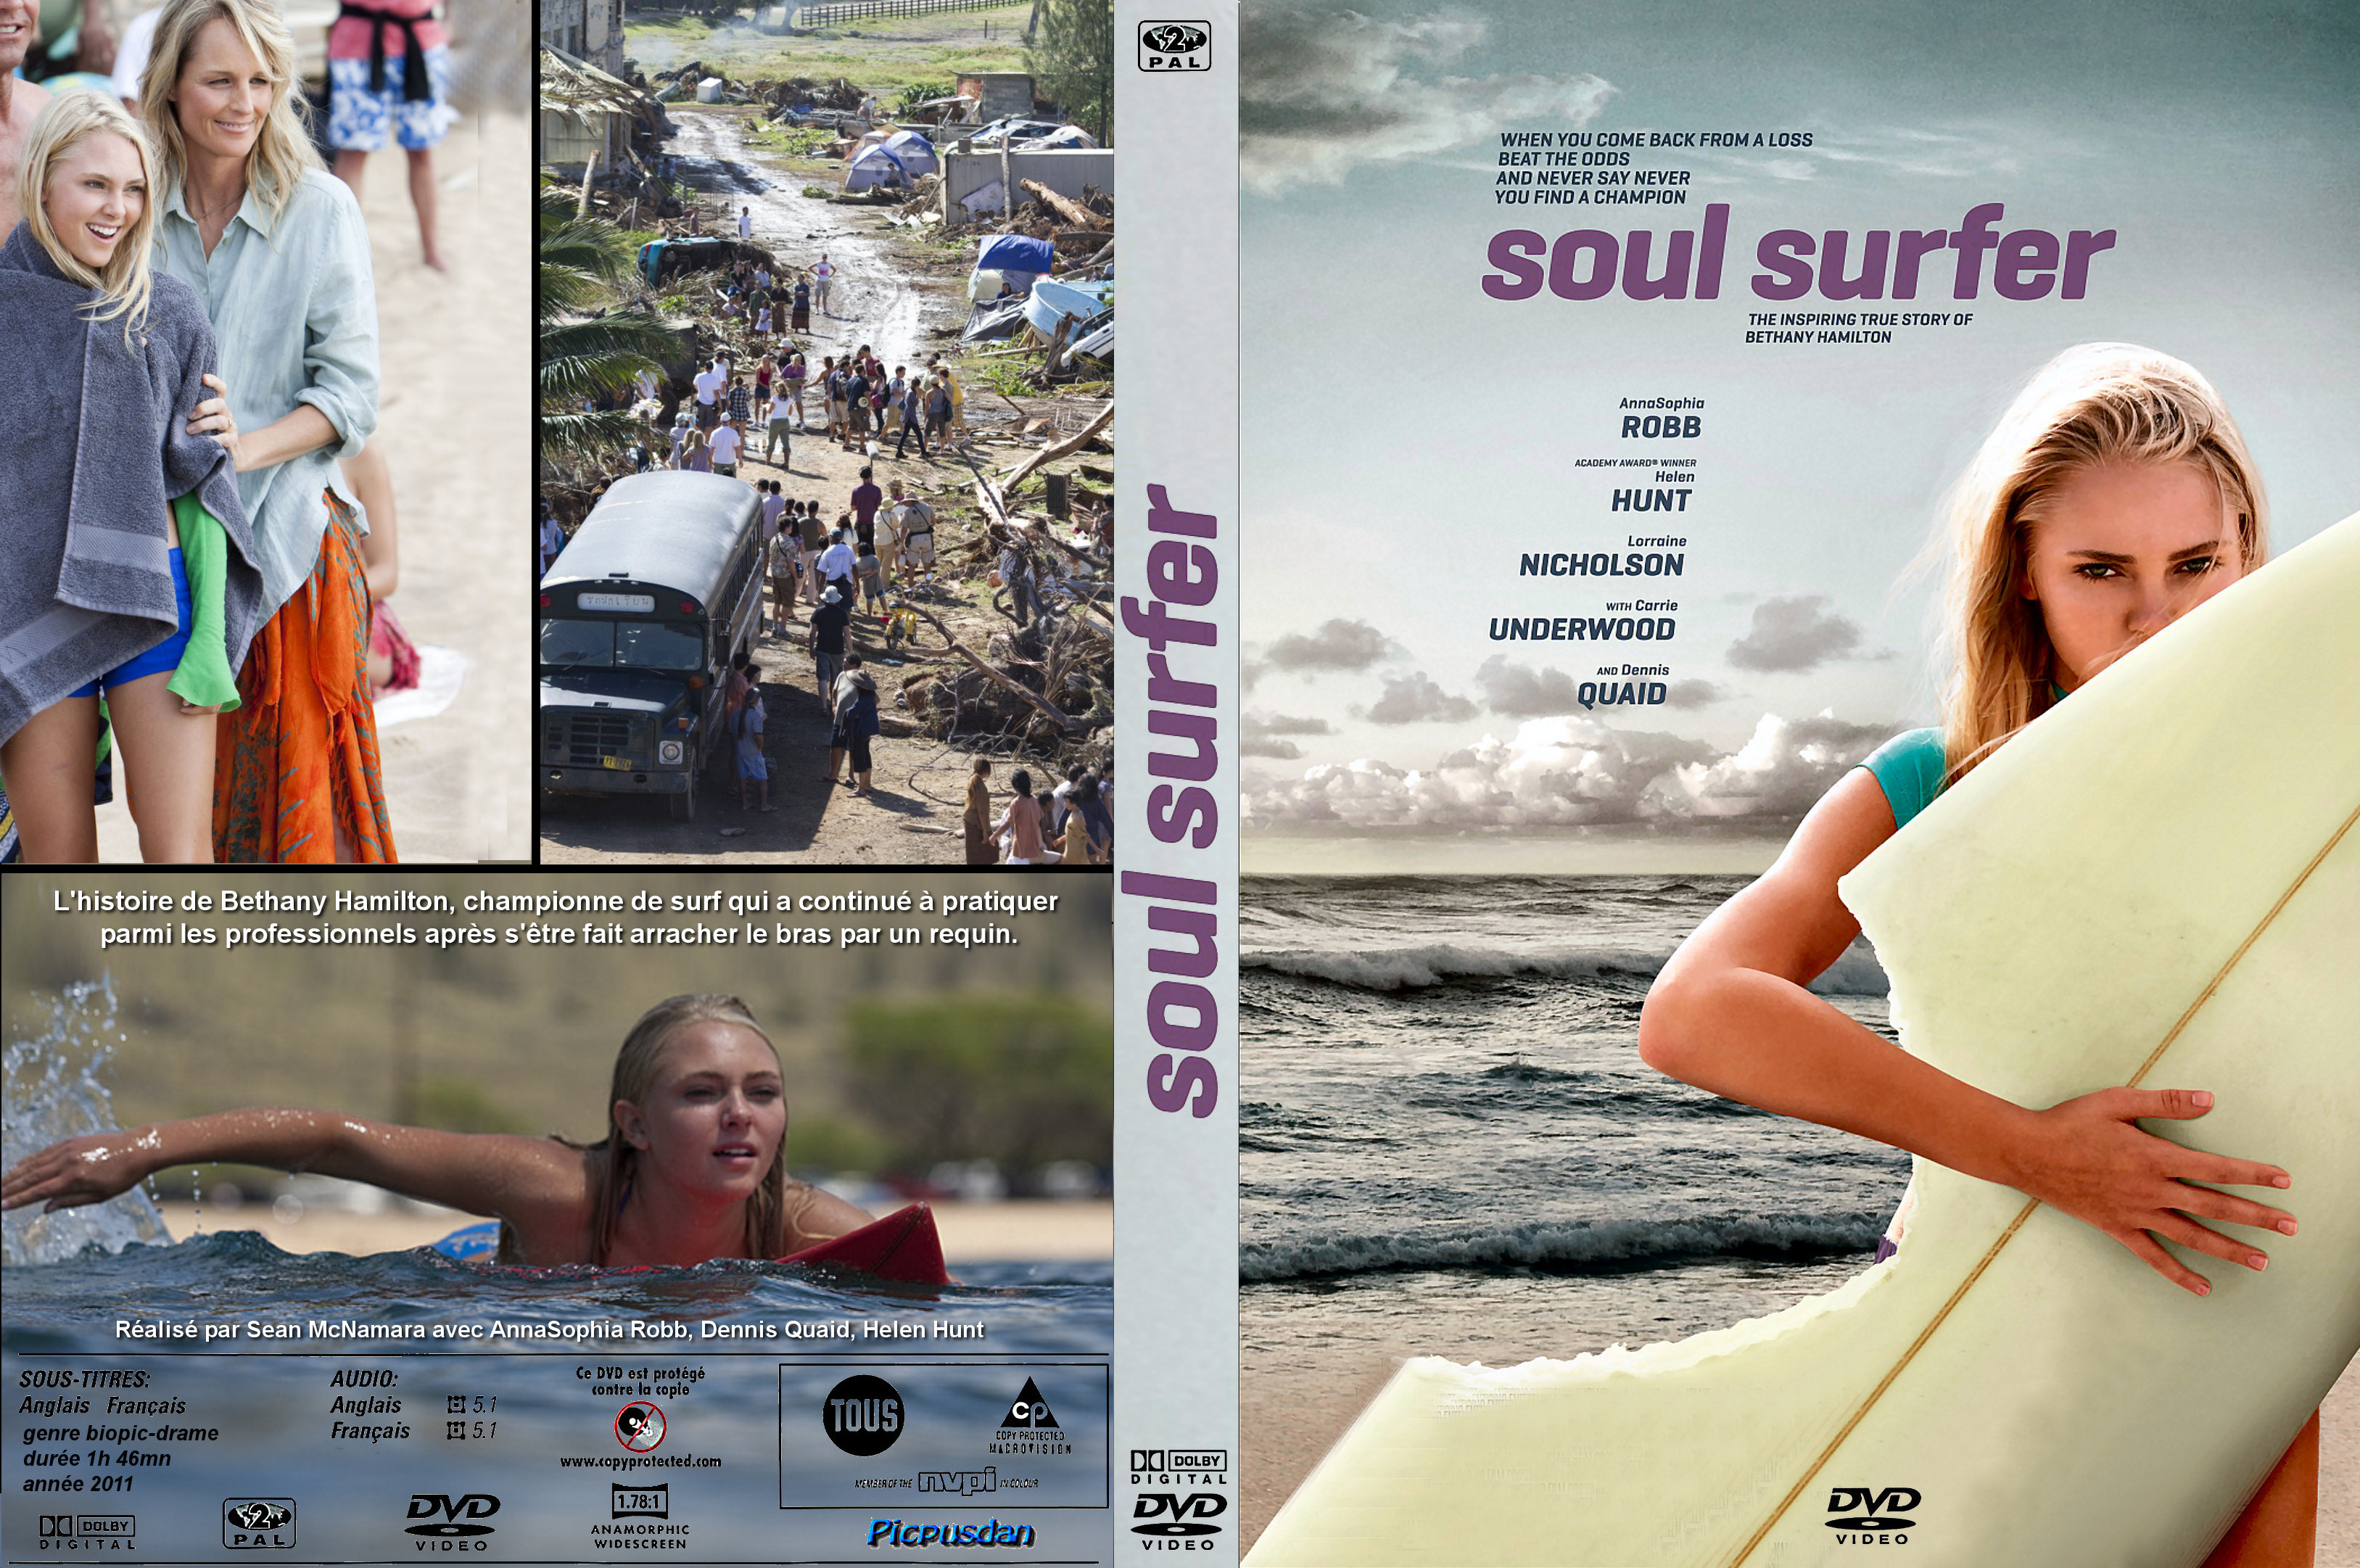 Jaquette DVD Soul surfer custom